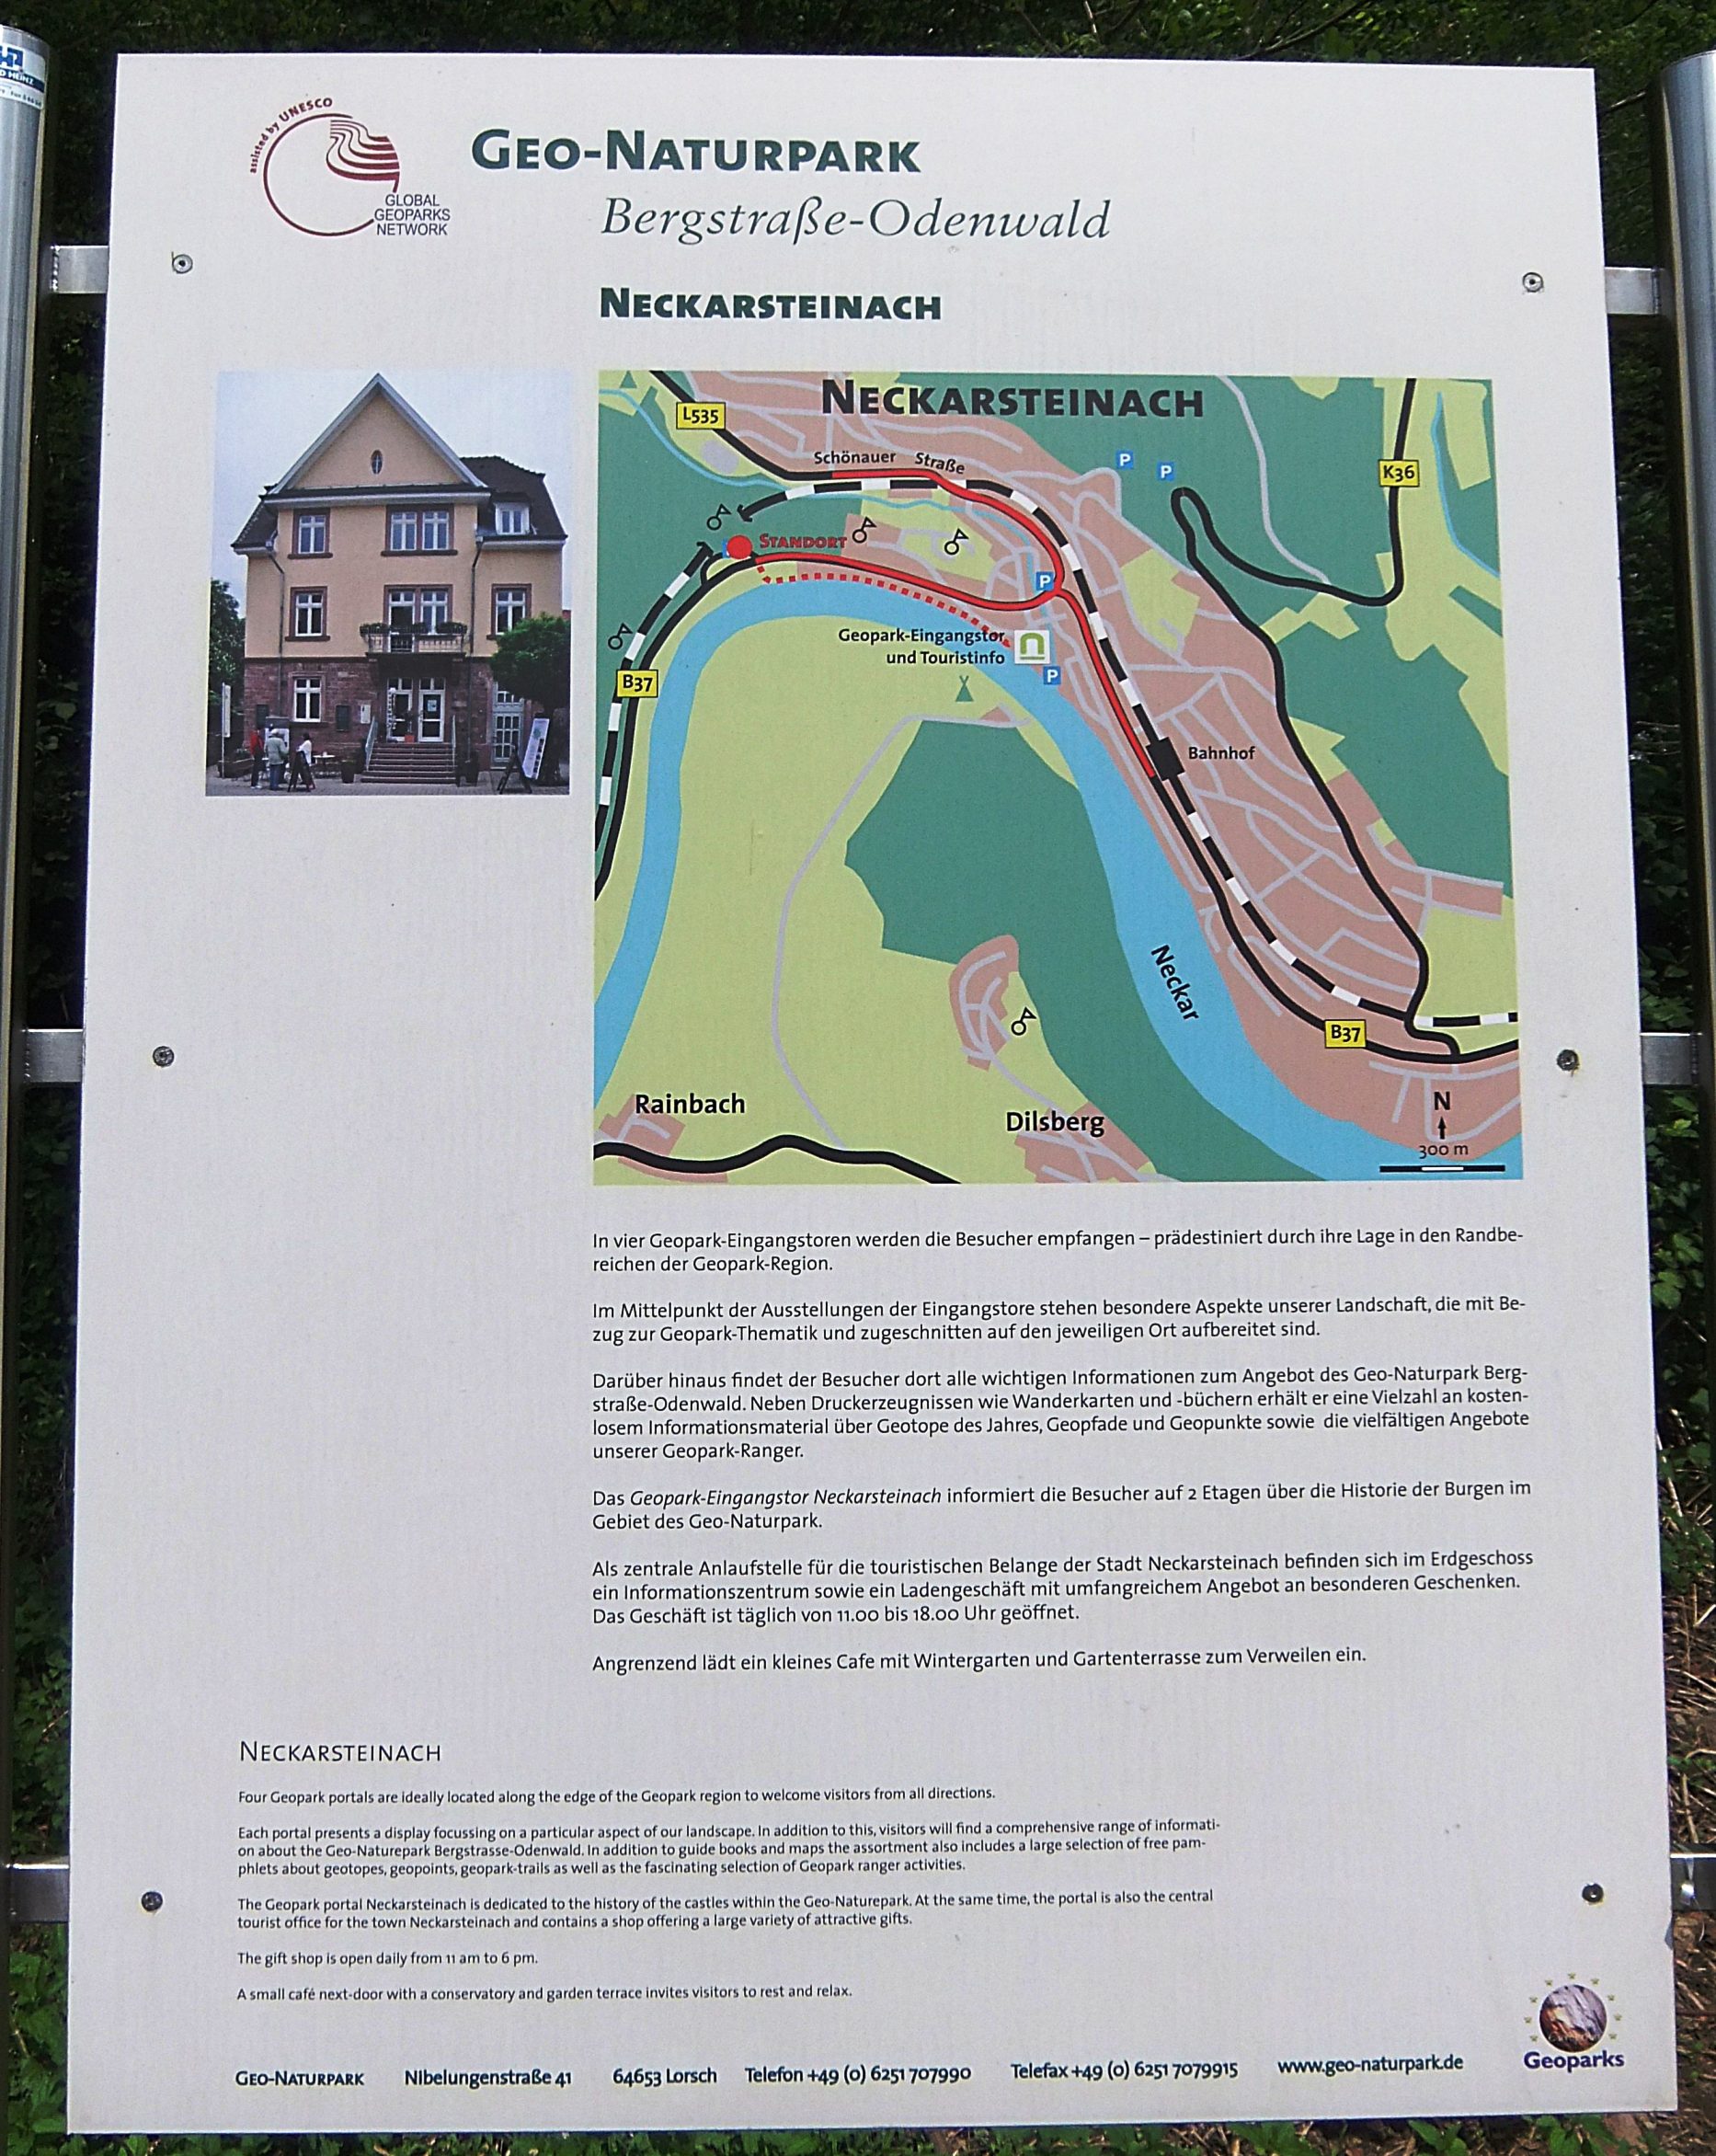 Datei:Geo-Naturpark Bergstraße-Odenwald Tafel Neckarsteinach.JPG